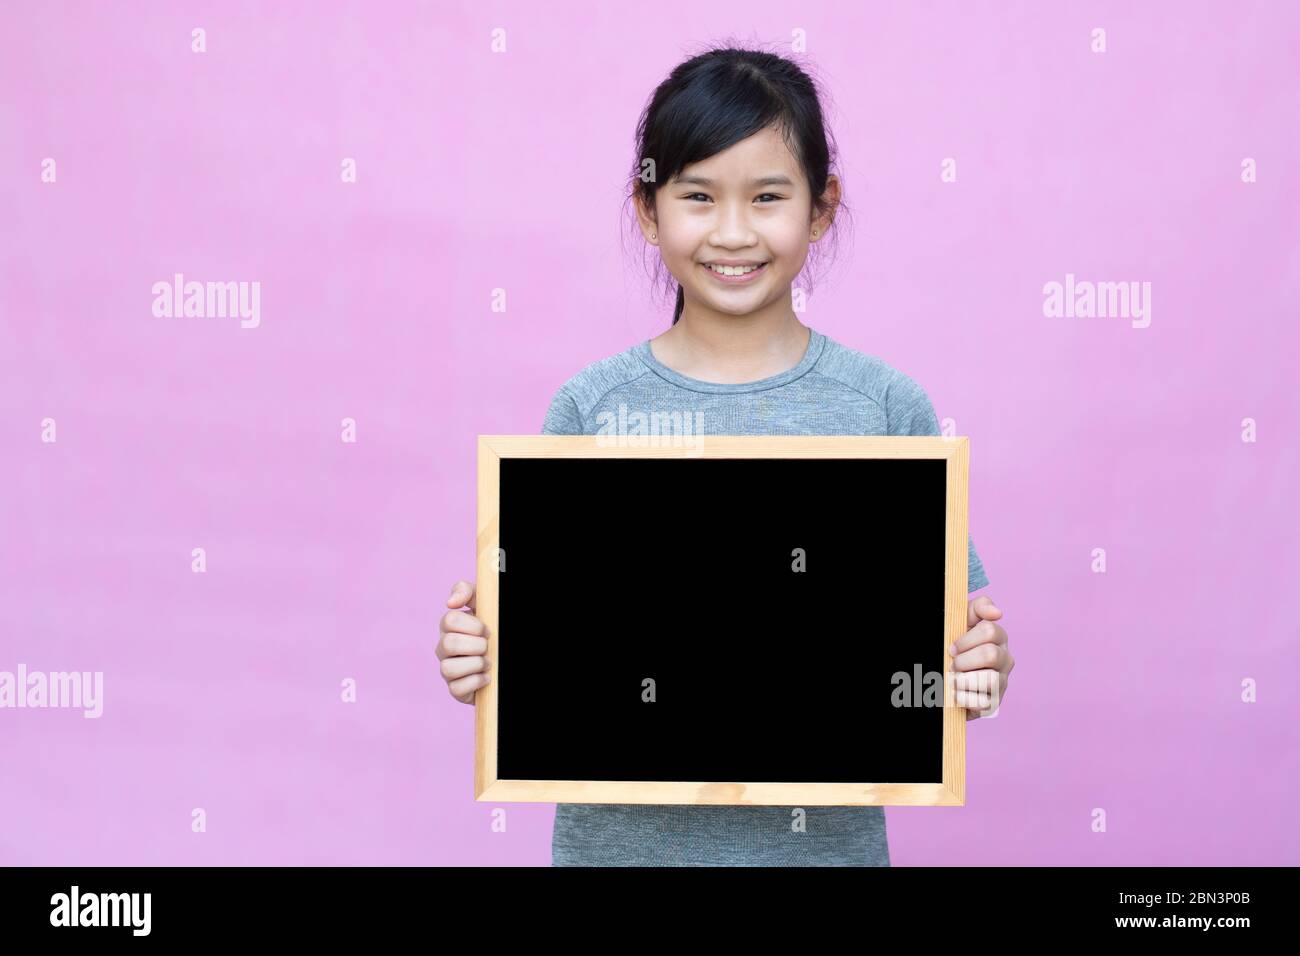 Little asian girl holding blackboard isolated on pink background. Stock Photo